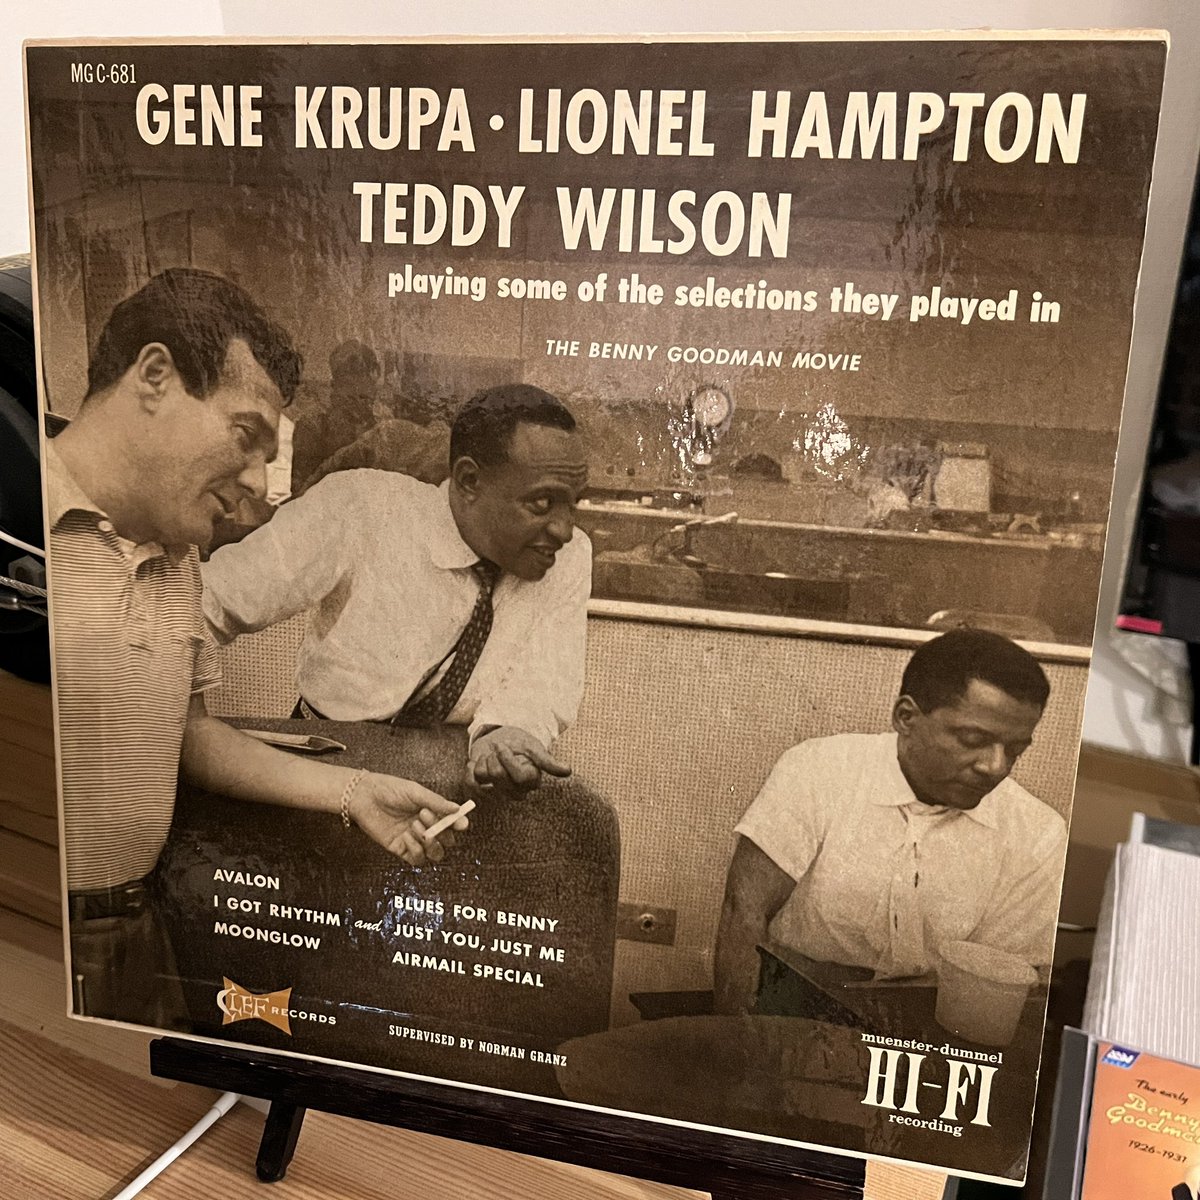 #NowPlaying #jazz
GENE KRUPA
LIONEL HAMPTON
TEDDY WILSON
ベニーグッドマン映画より曲集。

名トリオ、素晴らしい演奏◎